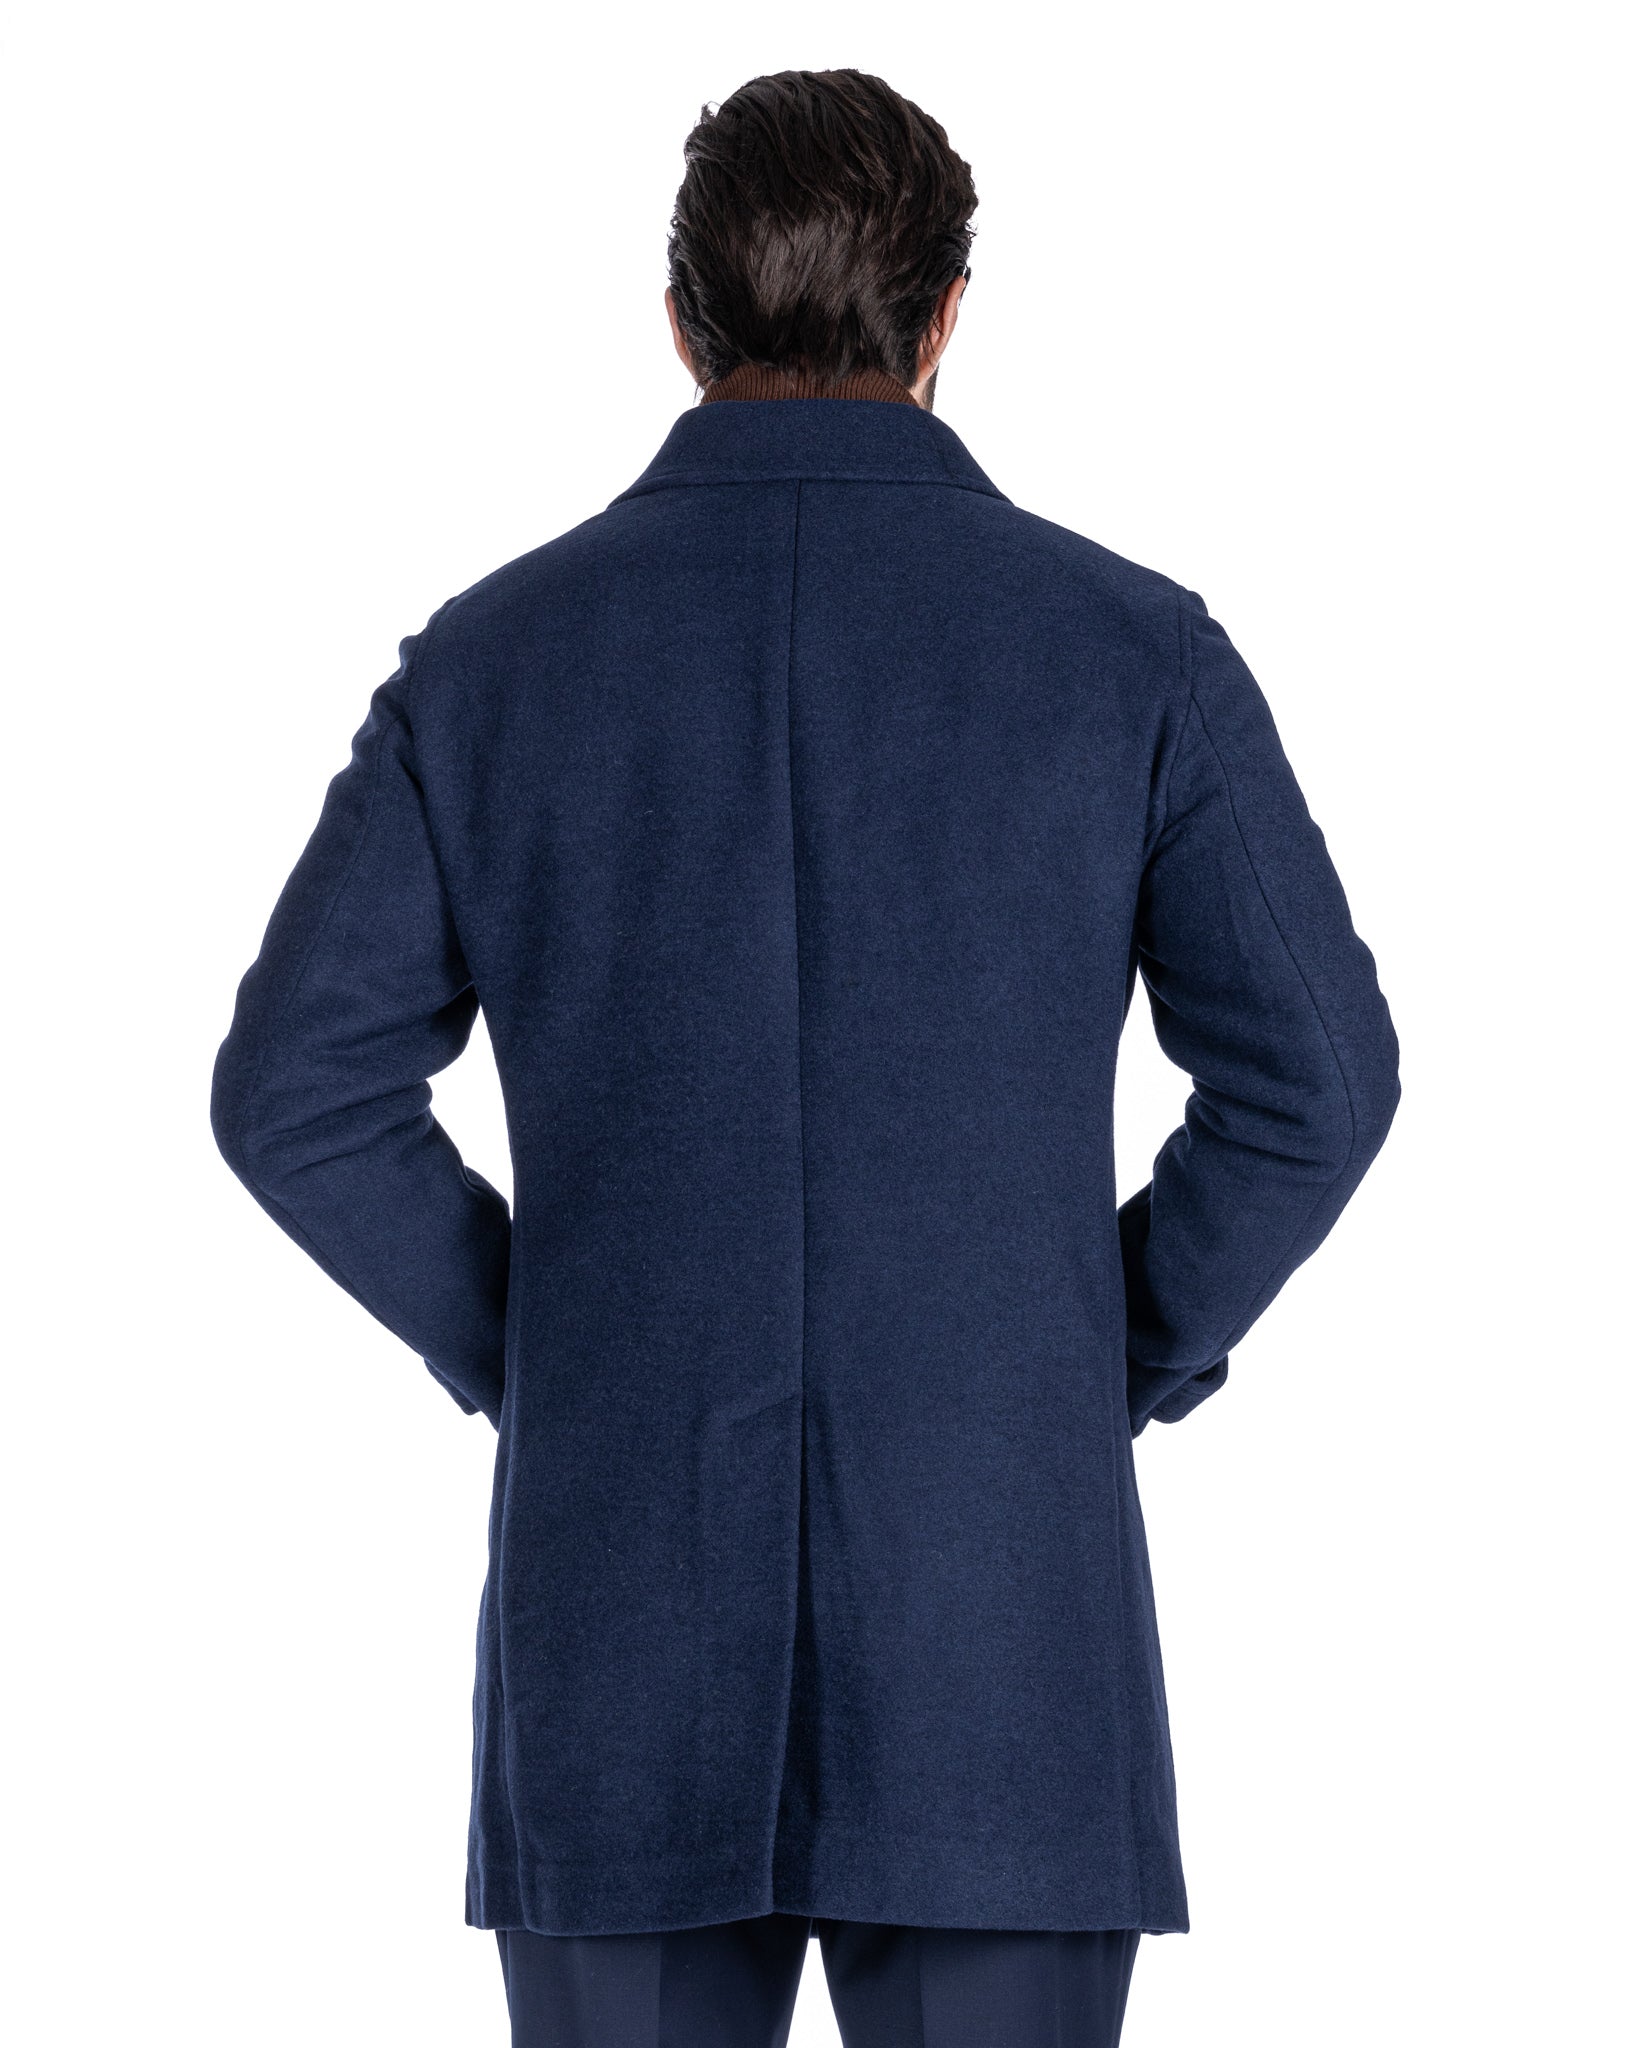 Jean - blue single-breasted coat